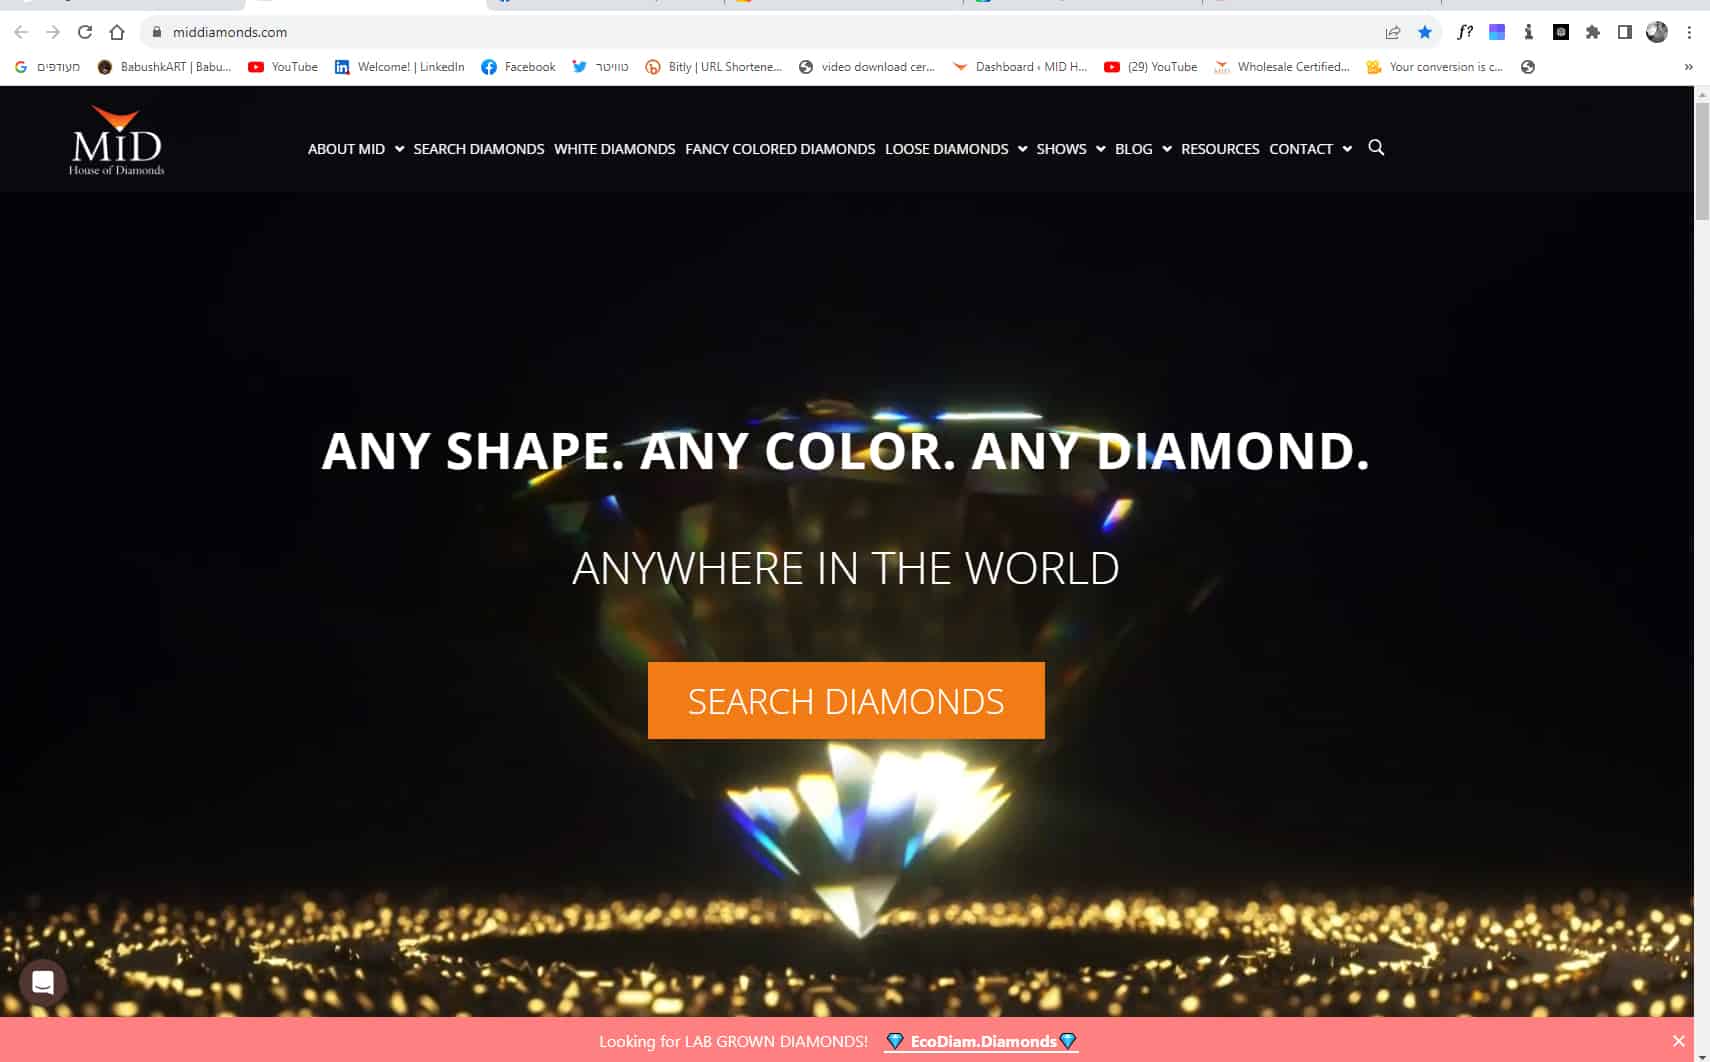 Diamond retail website www.middiamonds.com